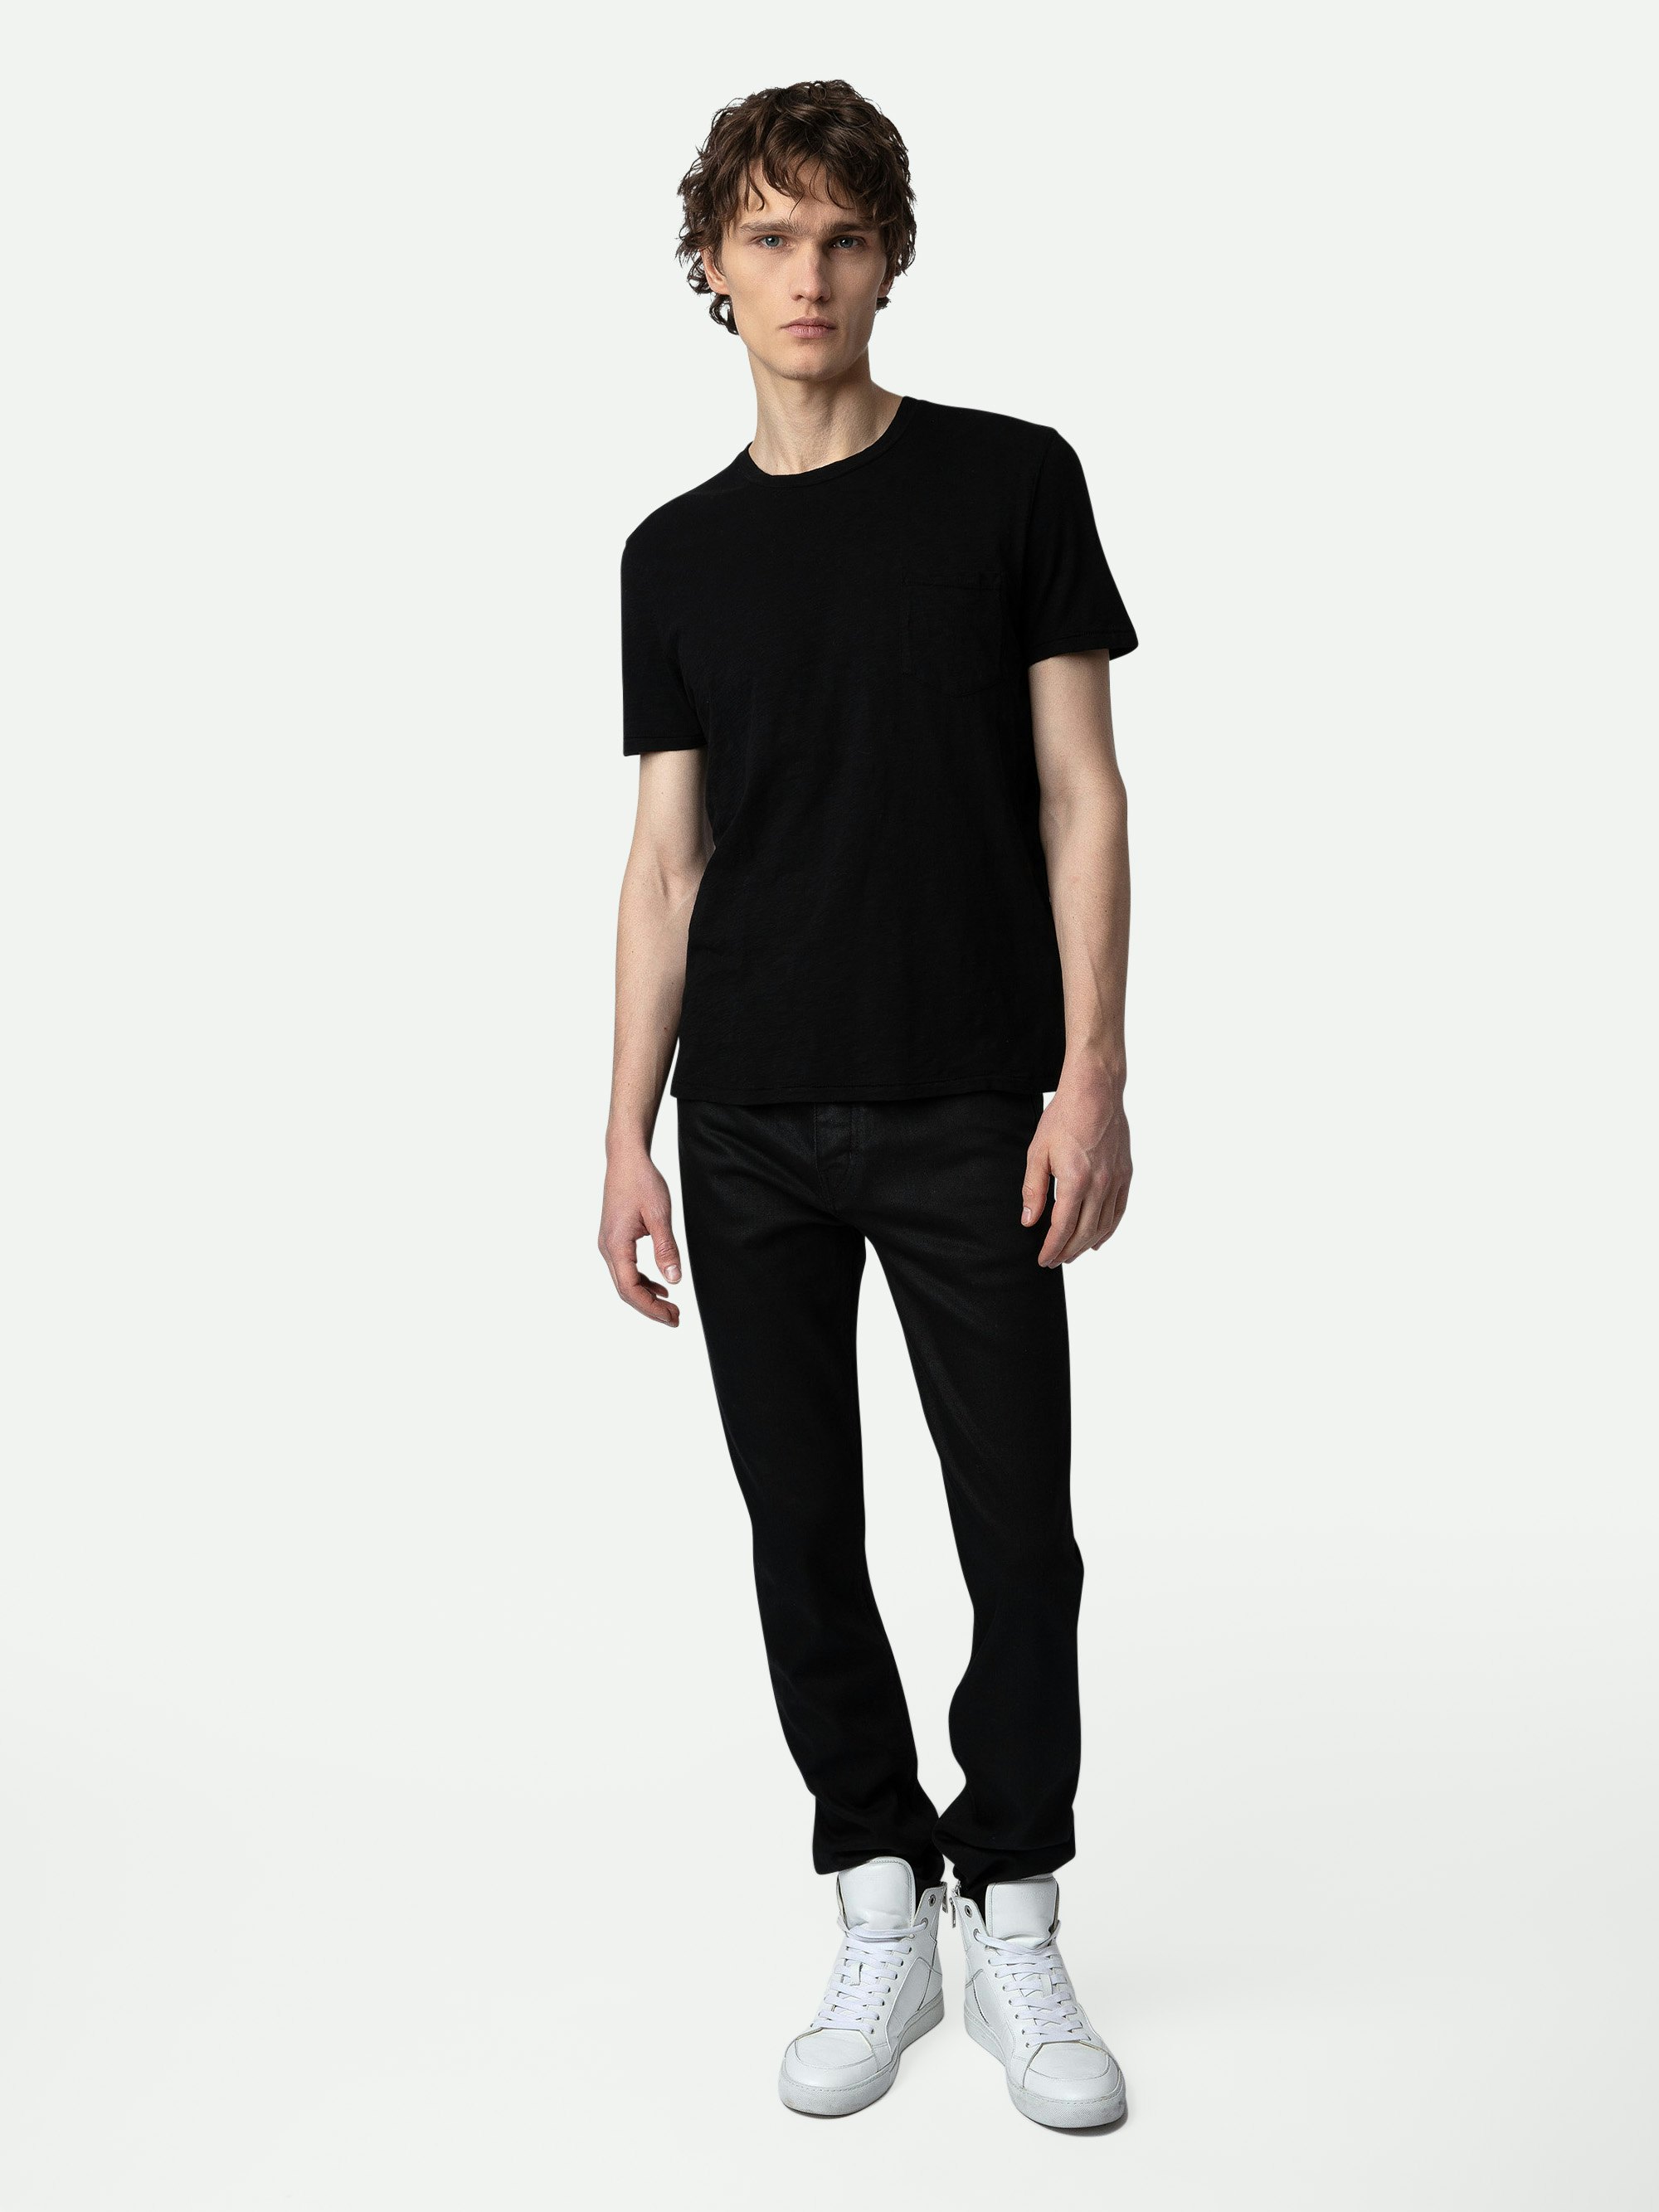 Camiseta Stockholm - Camiseta negra para hombre con cuello redondo.